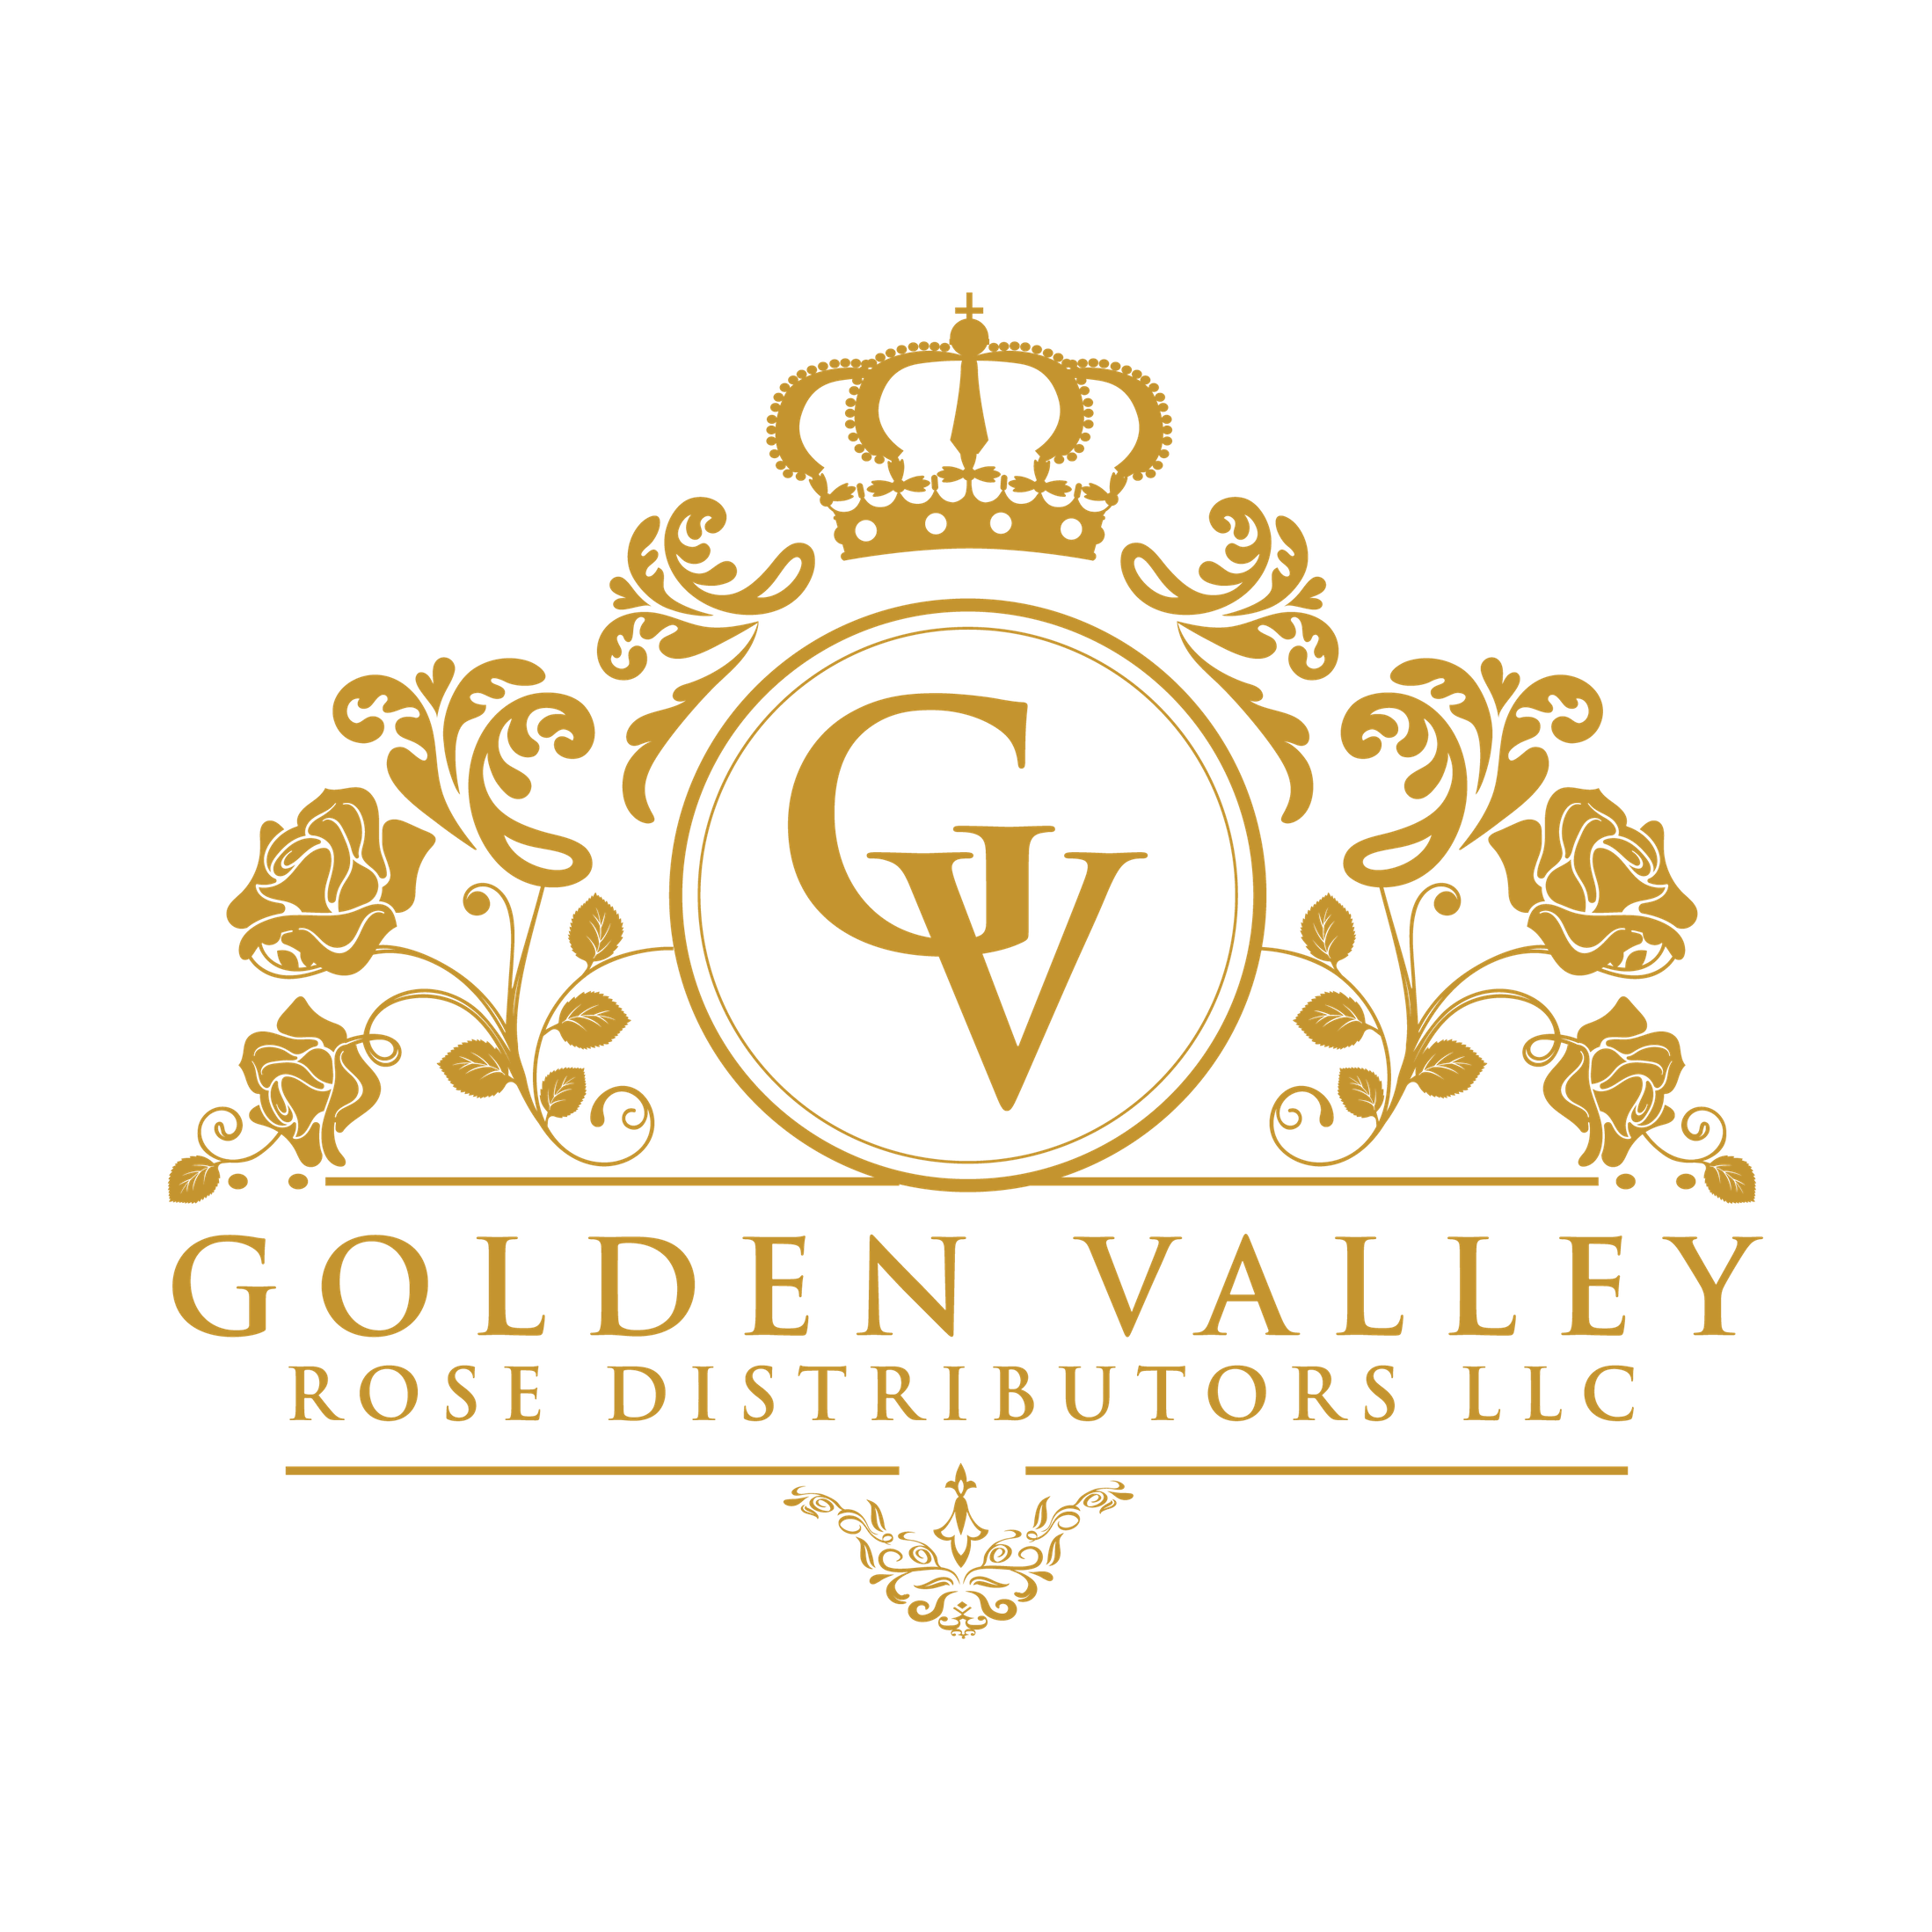 Golden Valley Rose Distributors LLC